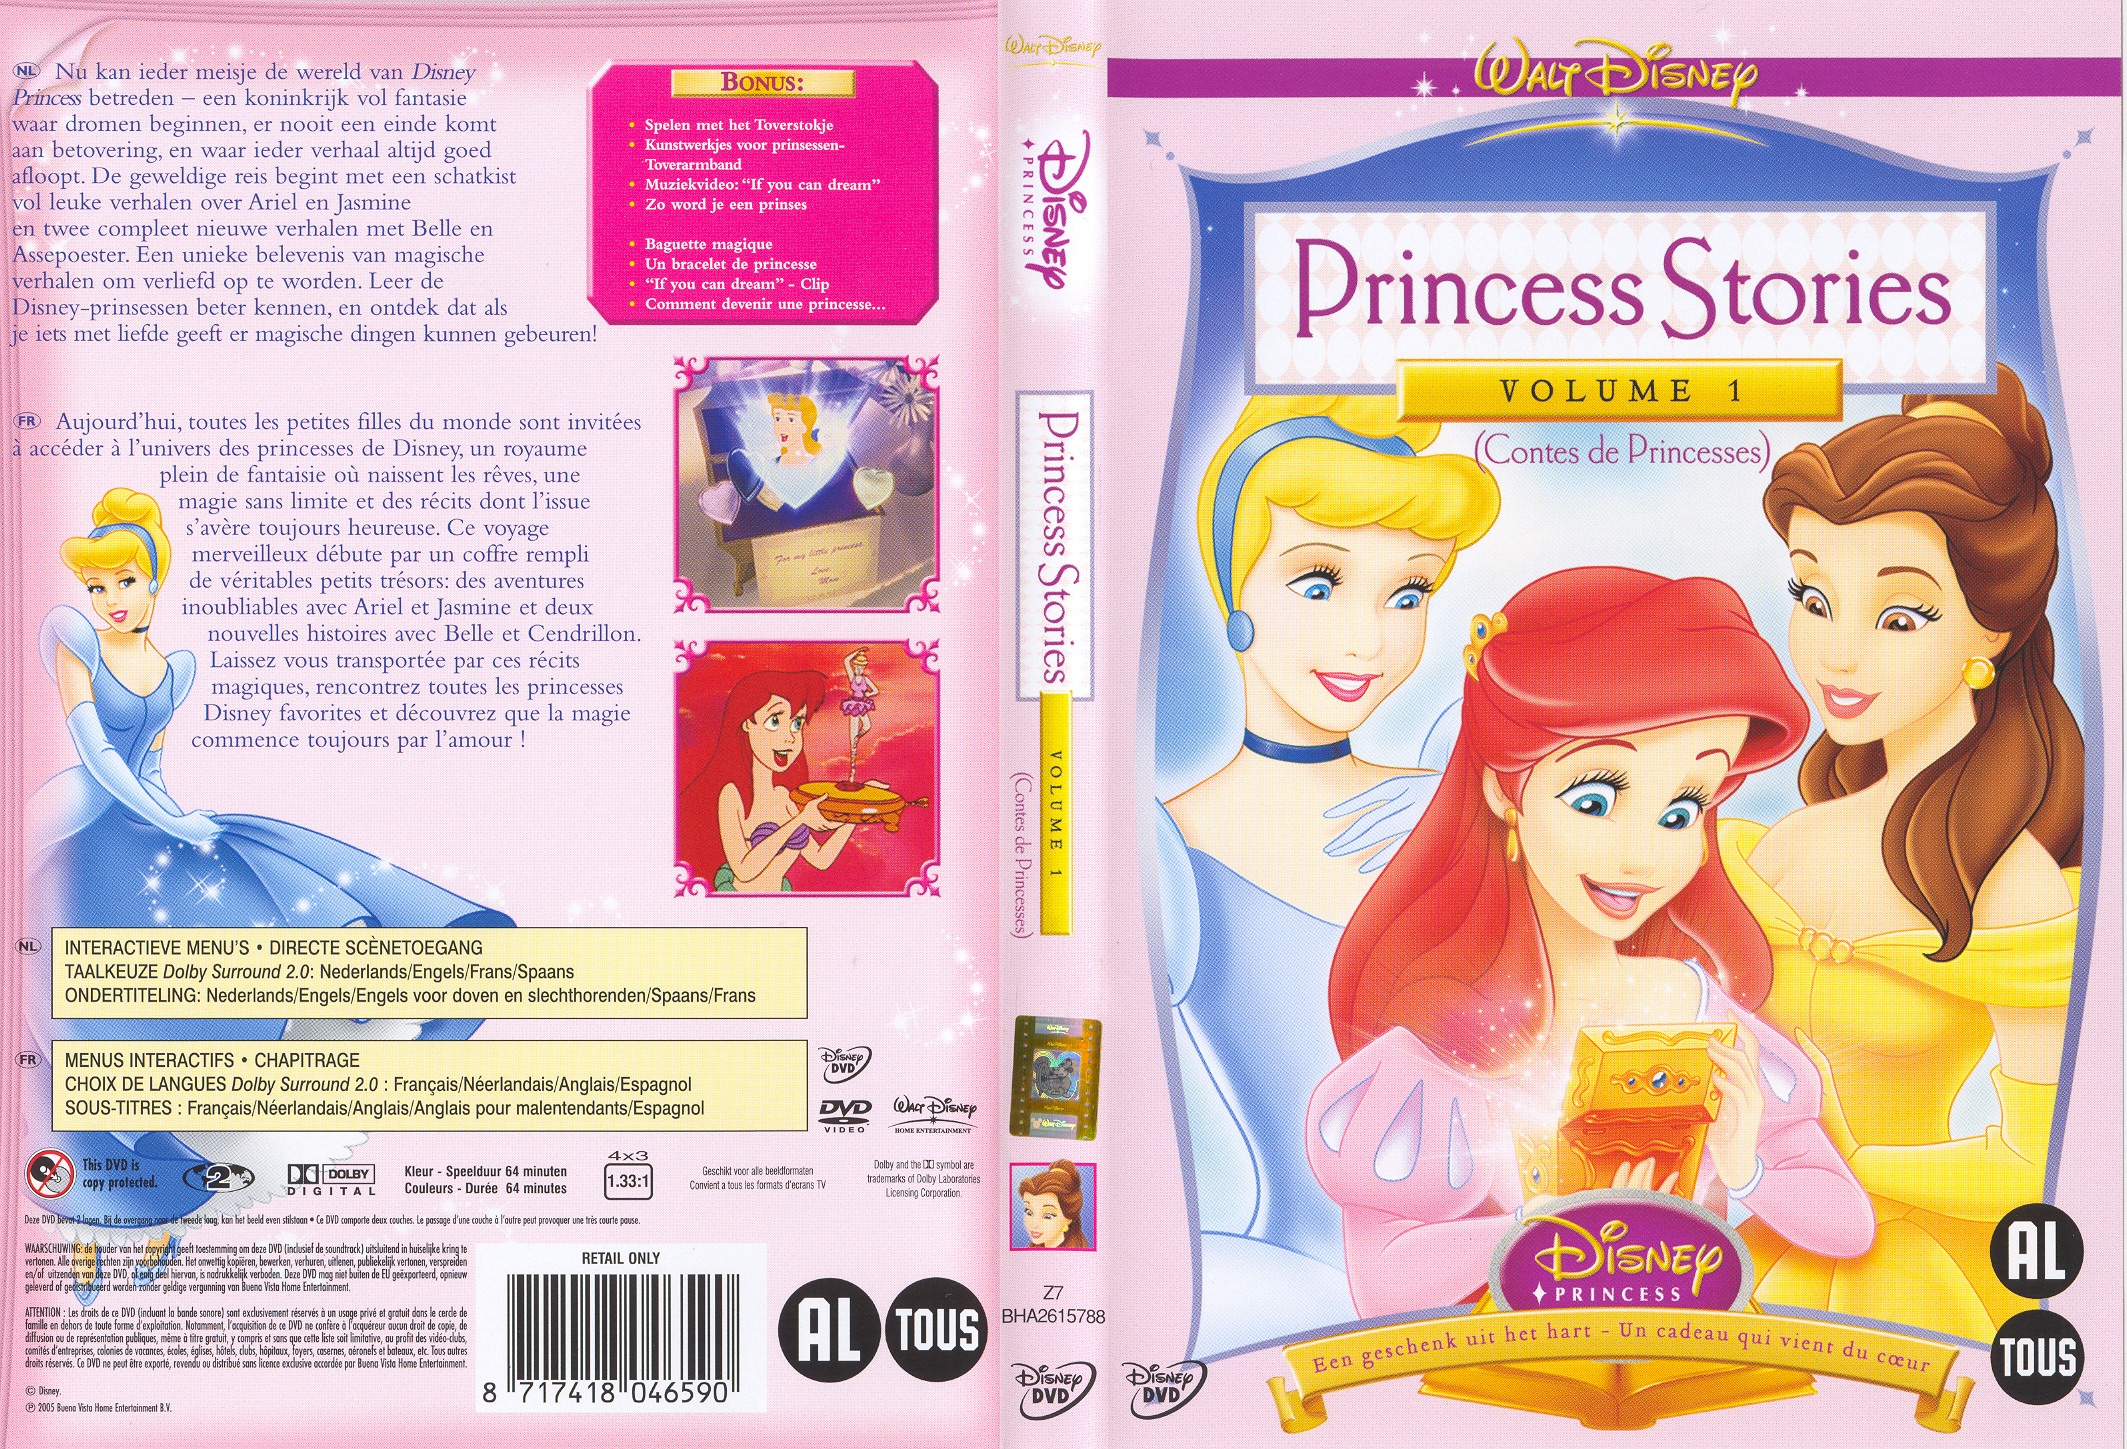 Disney Princess stories volume 1 cover